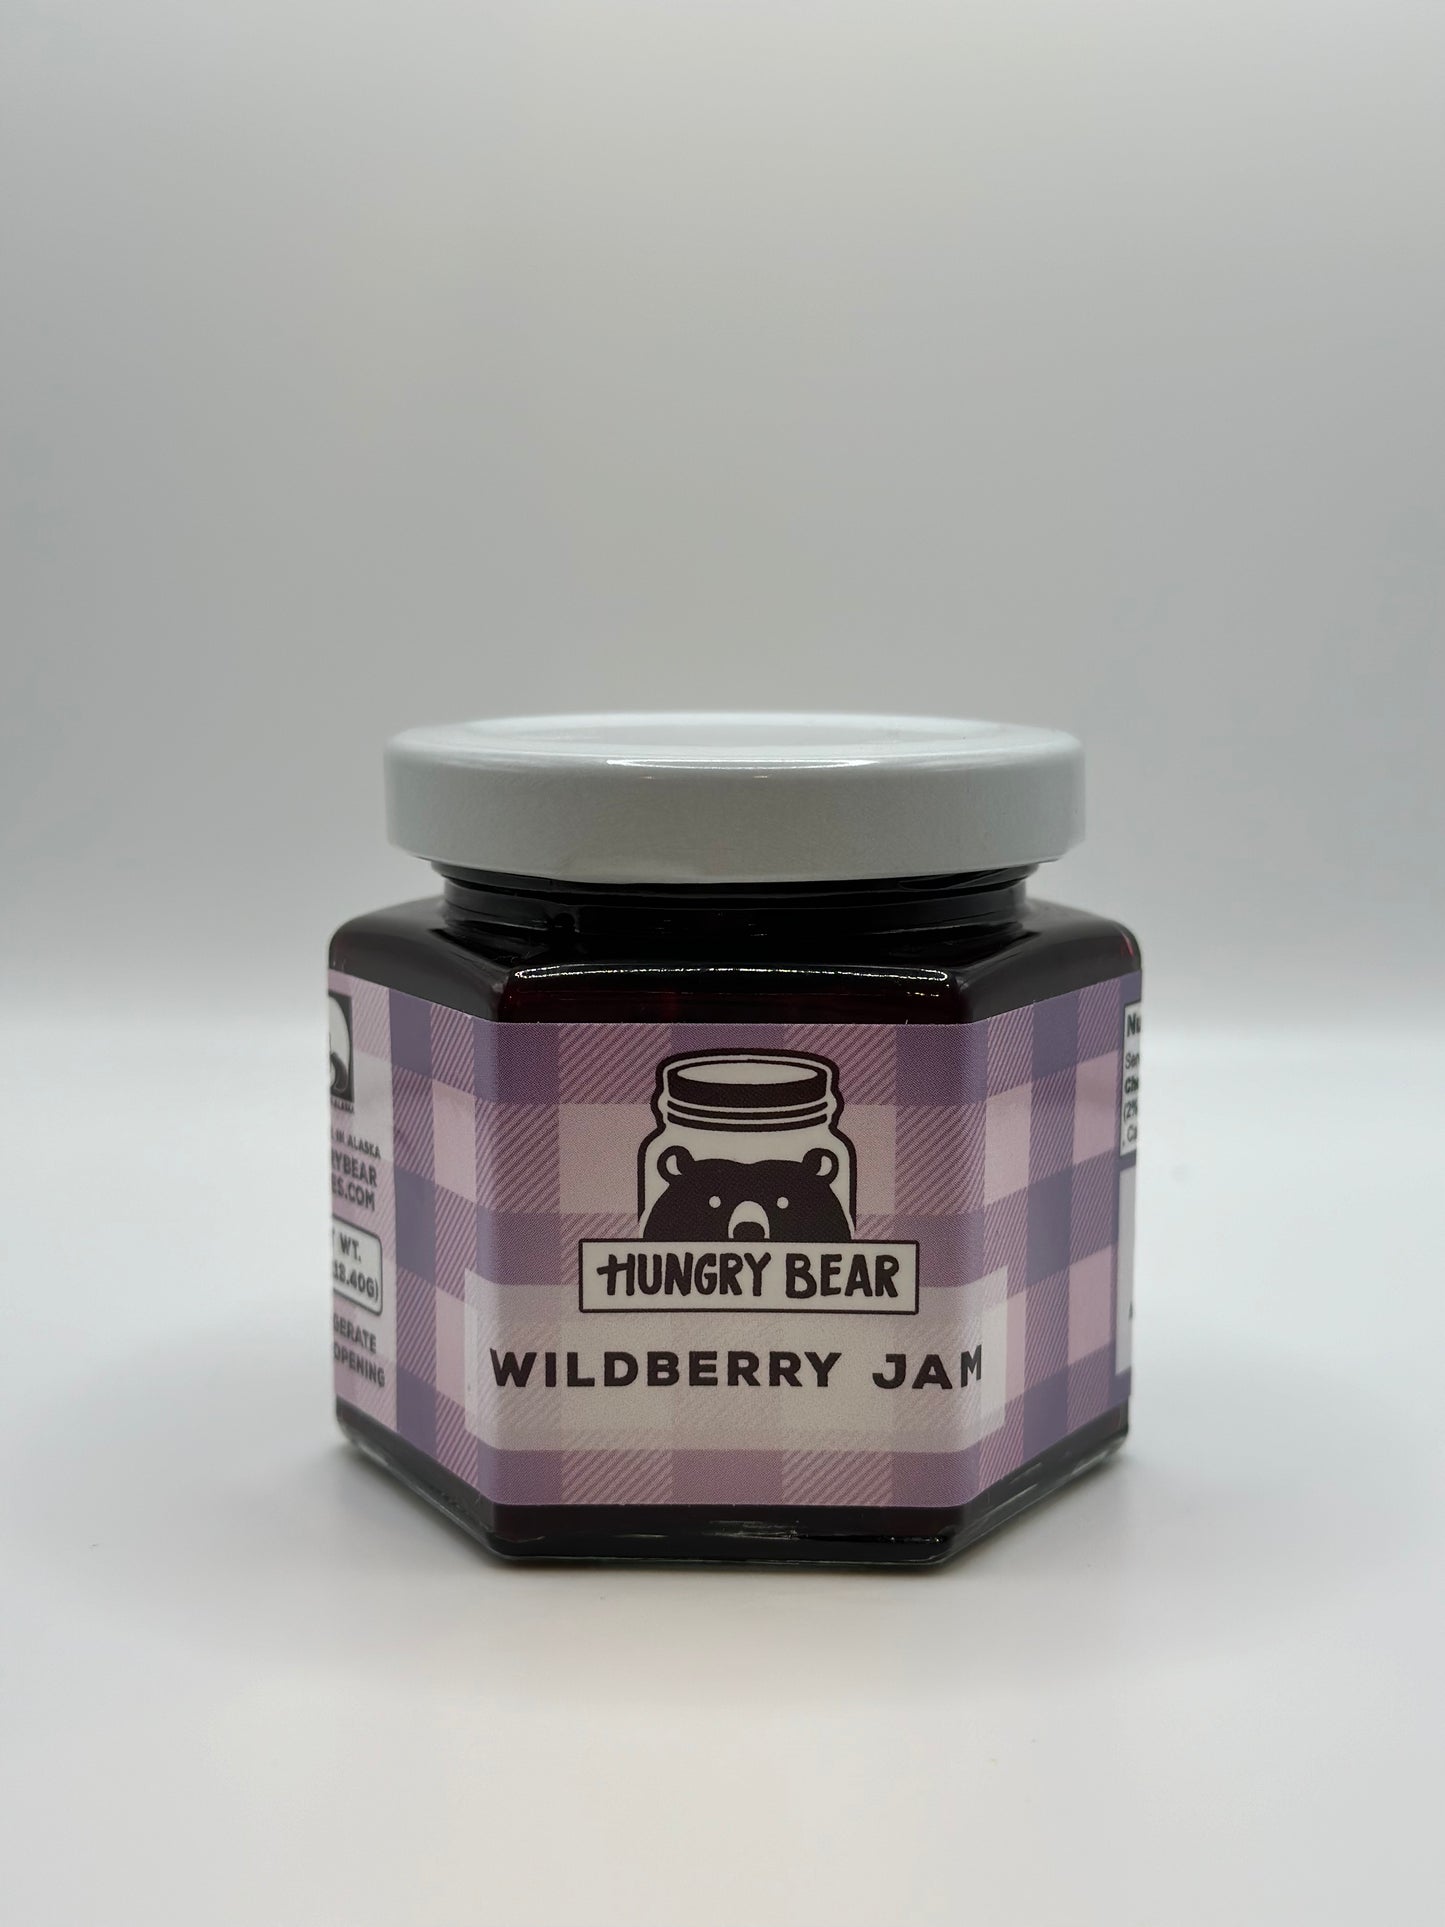 Wildberry Jam